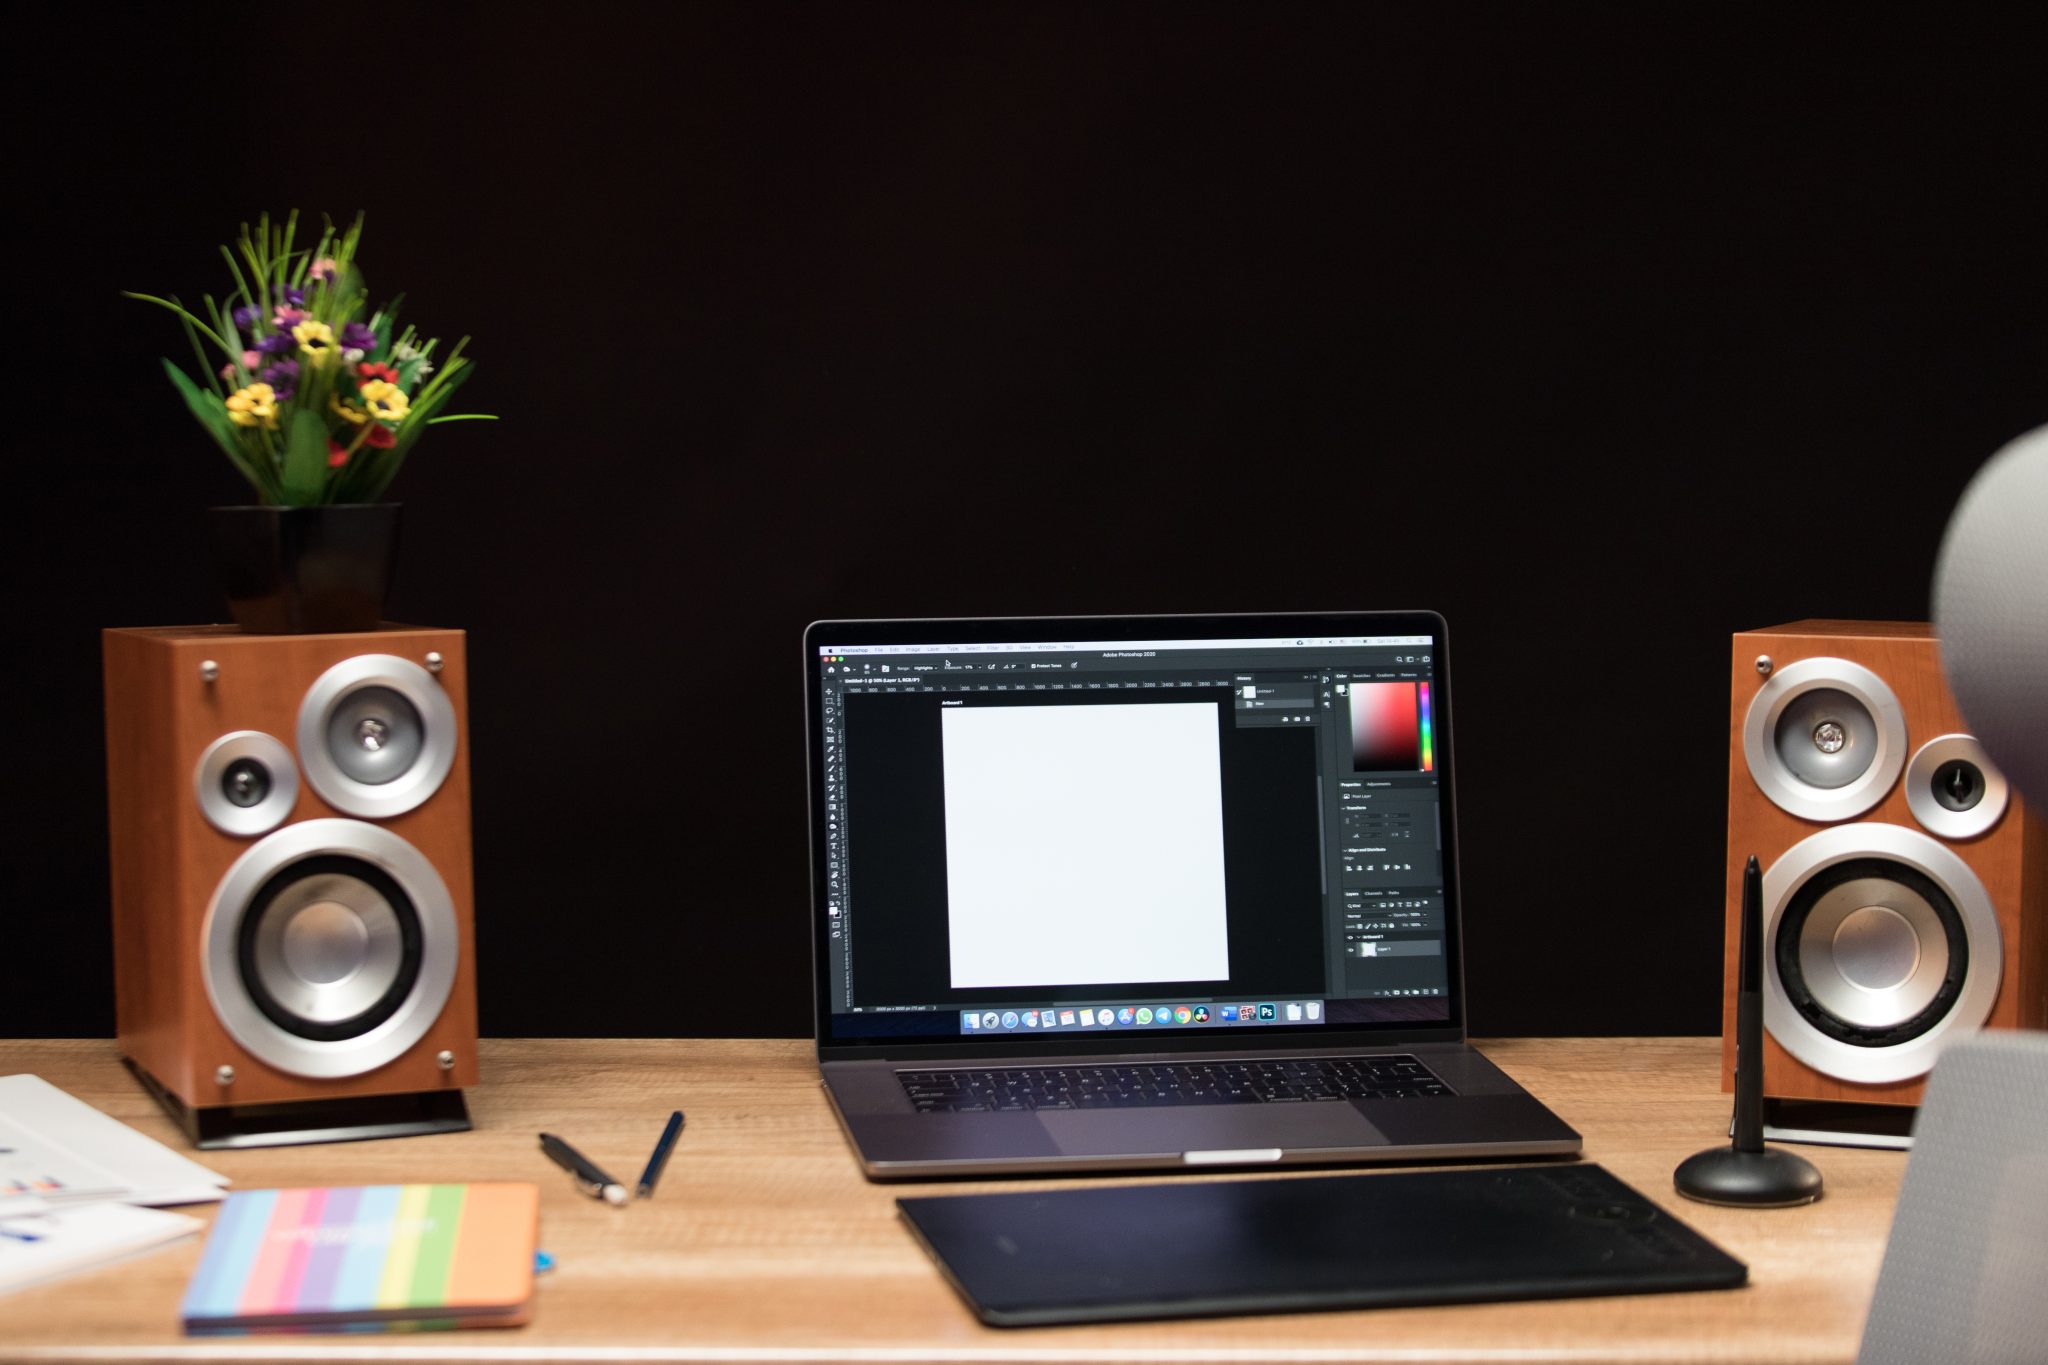 laptop-table-with-loudspeakers-flowers